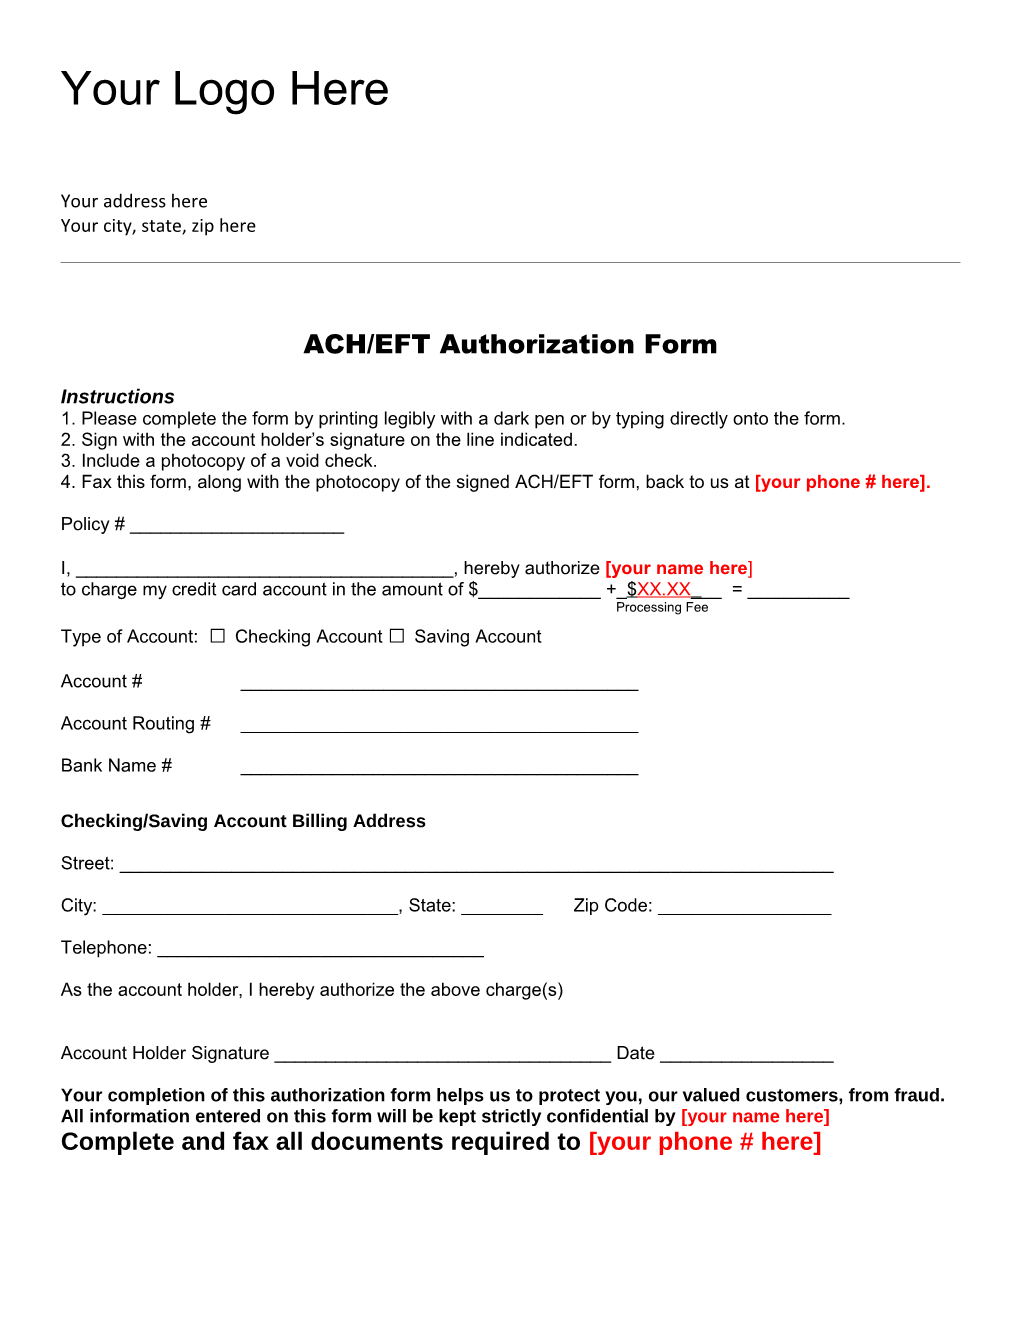 ACH/EFT Authorization Form